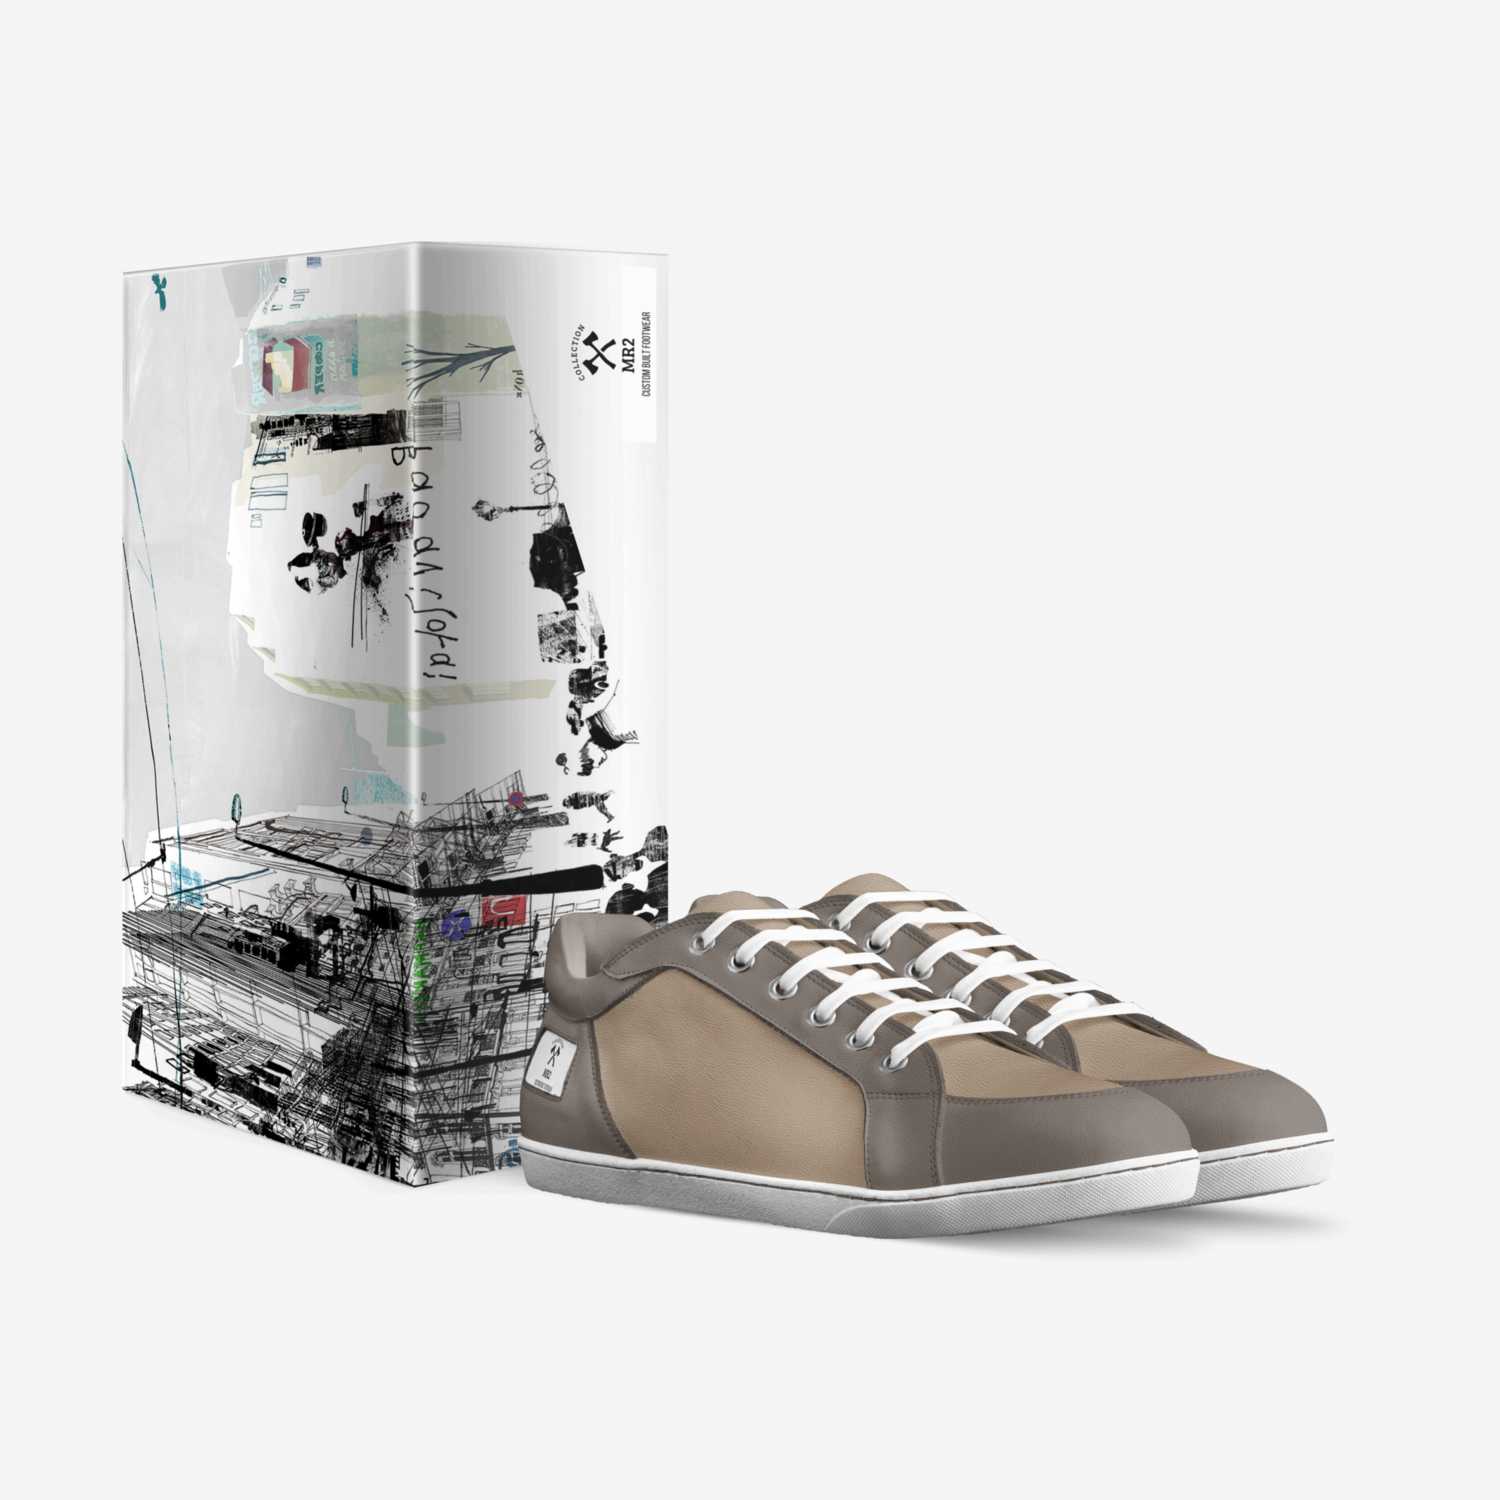 MR2 custom made in Italy shoes by Dario Romero | Box view